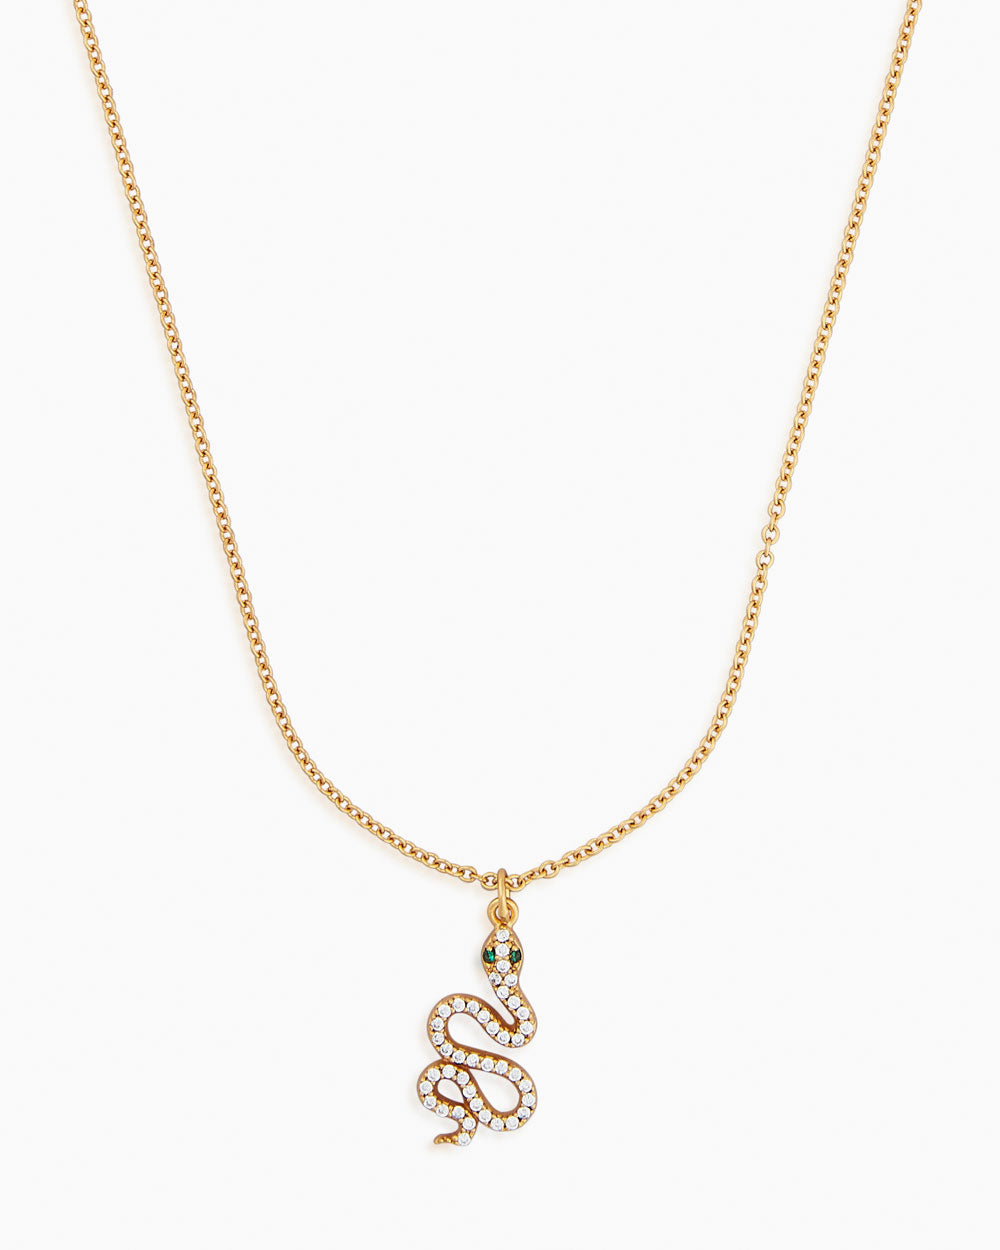 Serena Gold Necklace